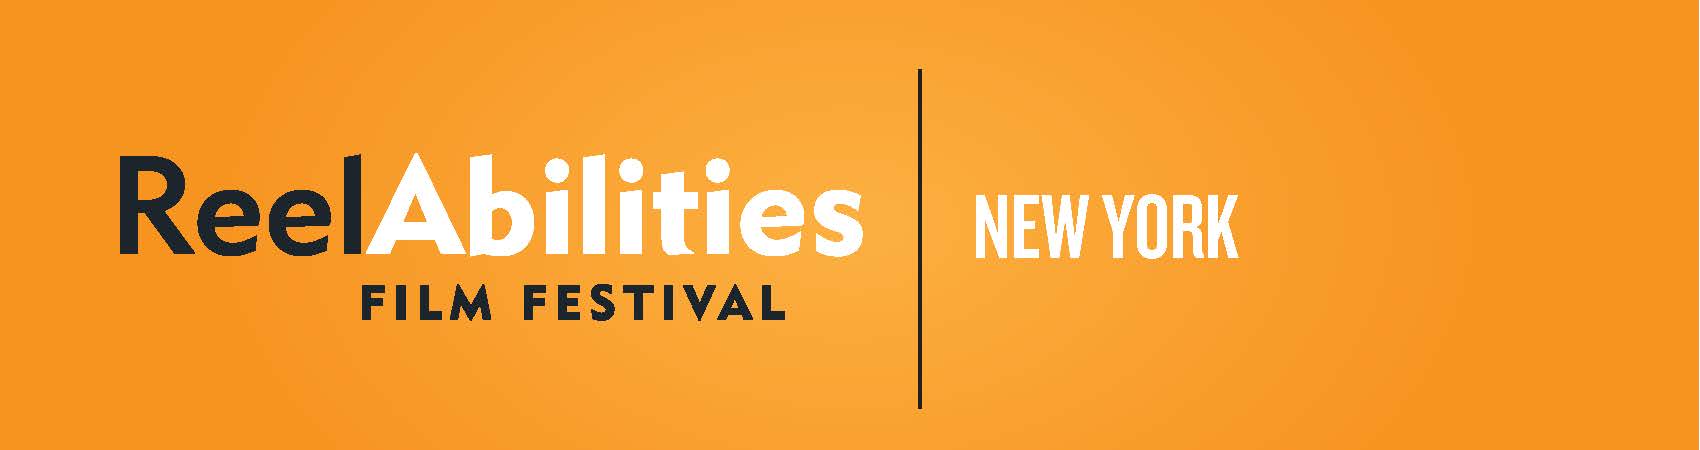 ReelAbilties Film Festival: New York